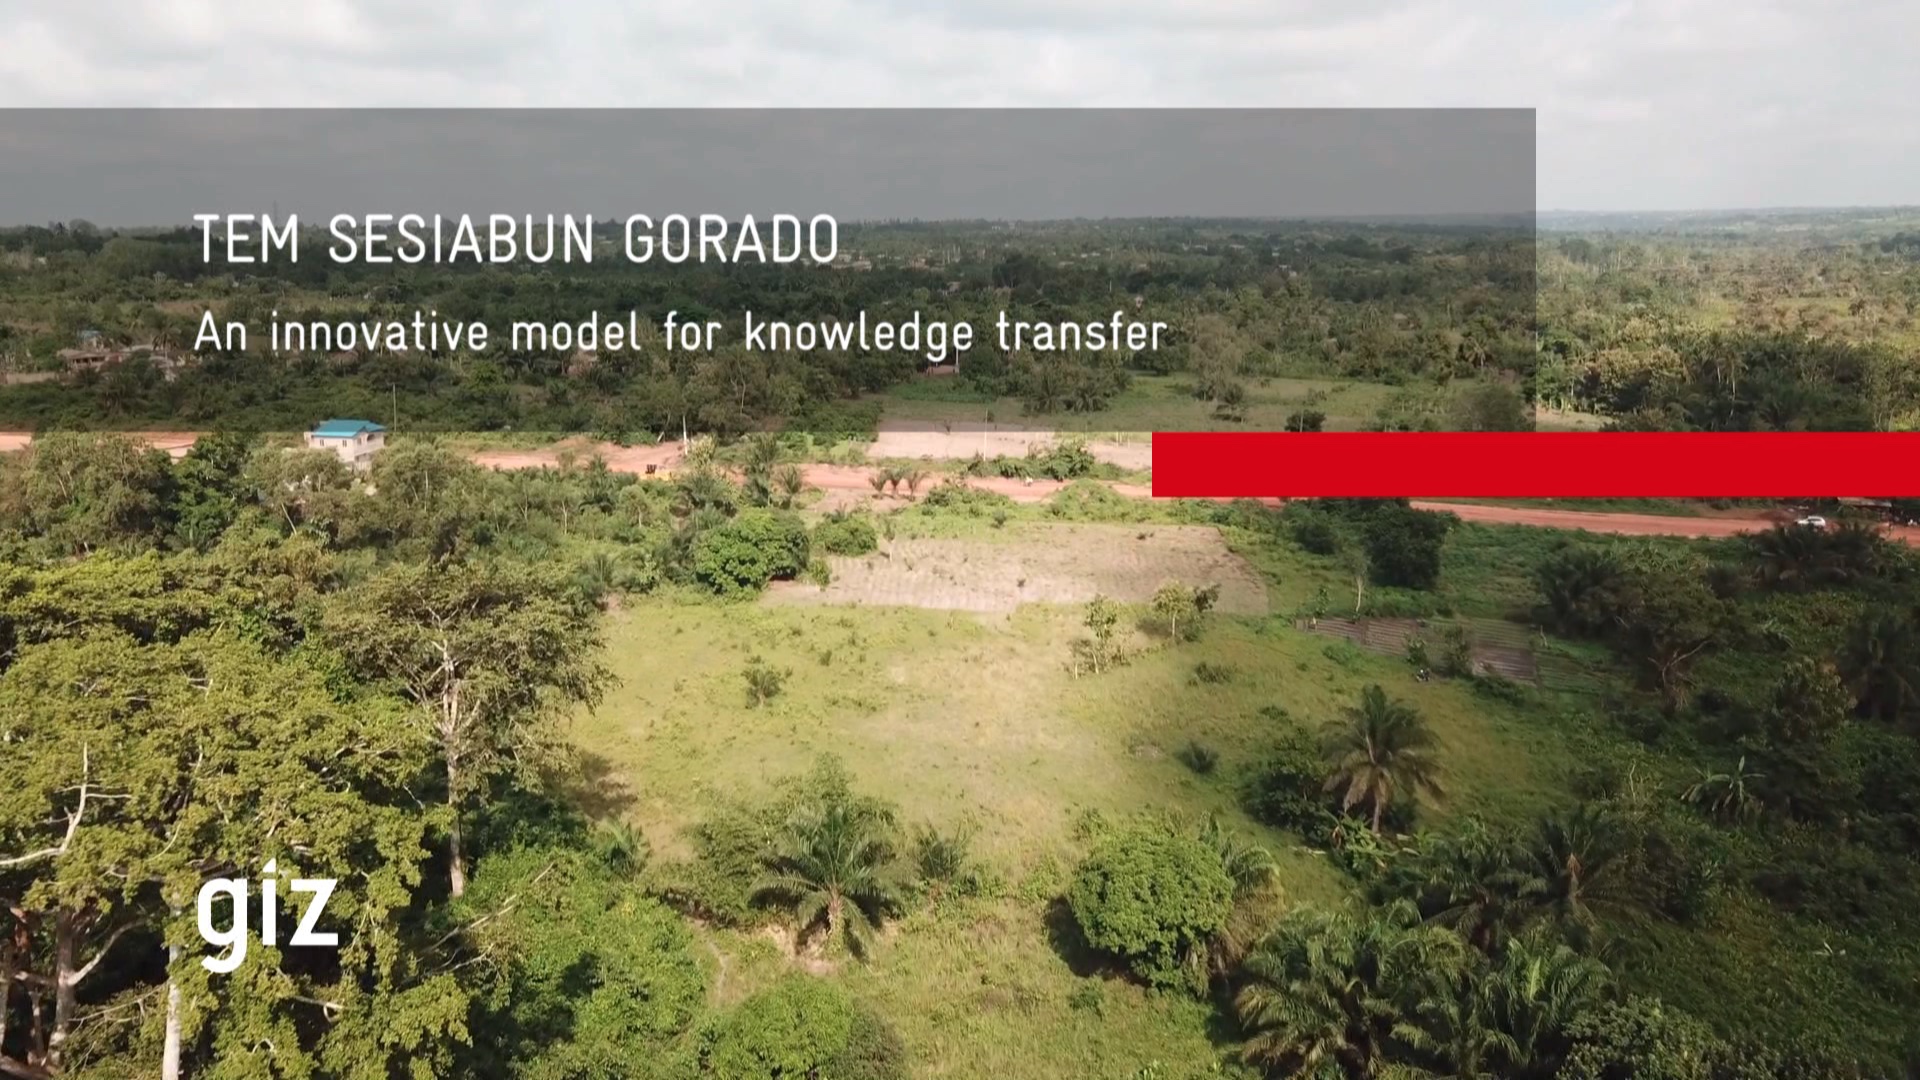 Tem Sesiabun Gorado - An innovative model for knowledge transfer